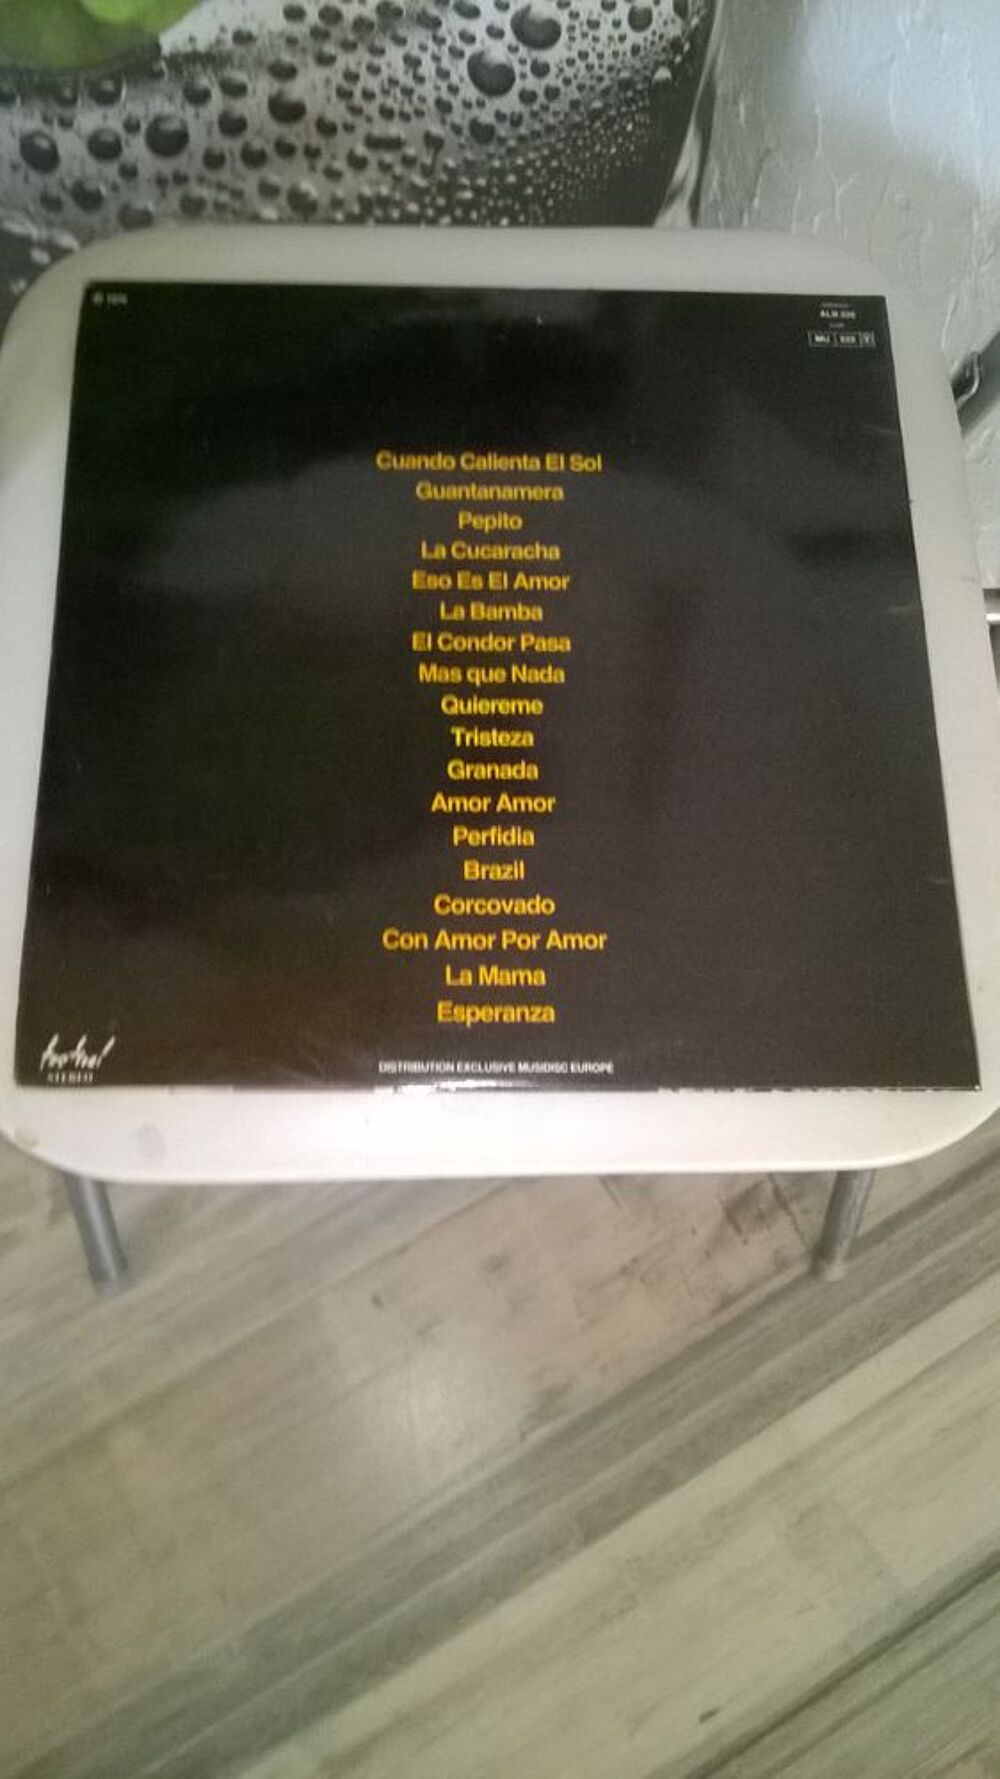 Vinyle Los Machucambos
La Bamba
1979
Excellent etat
Doub CD et vinyles